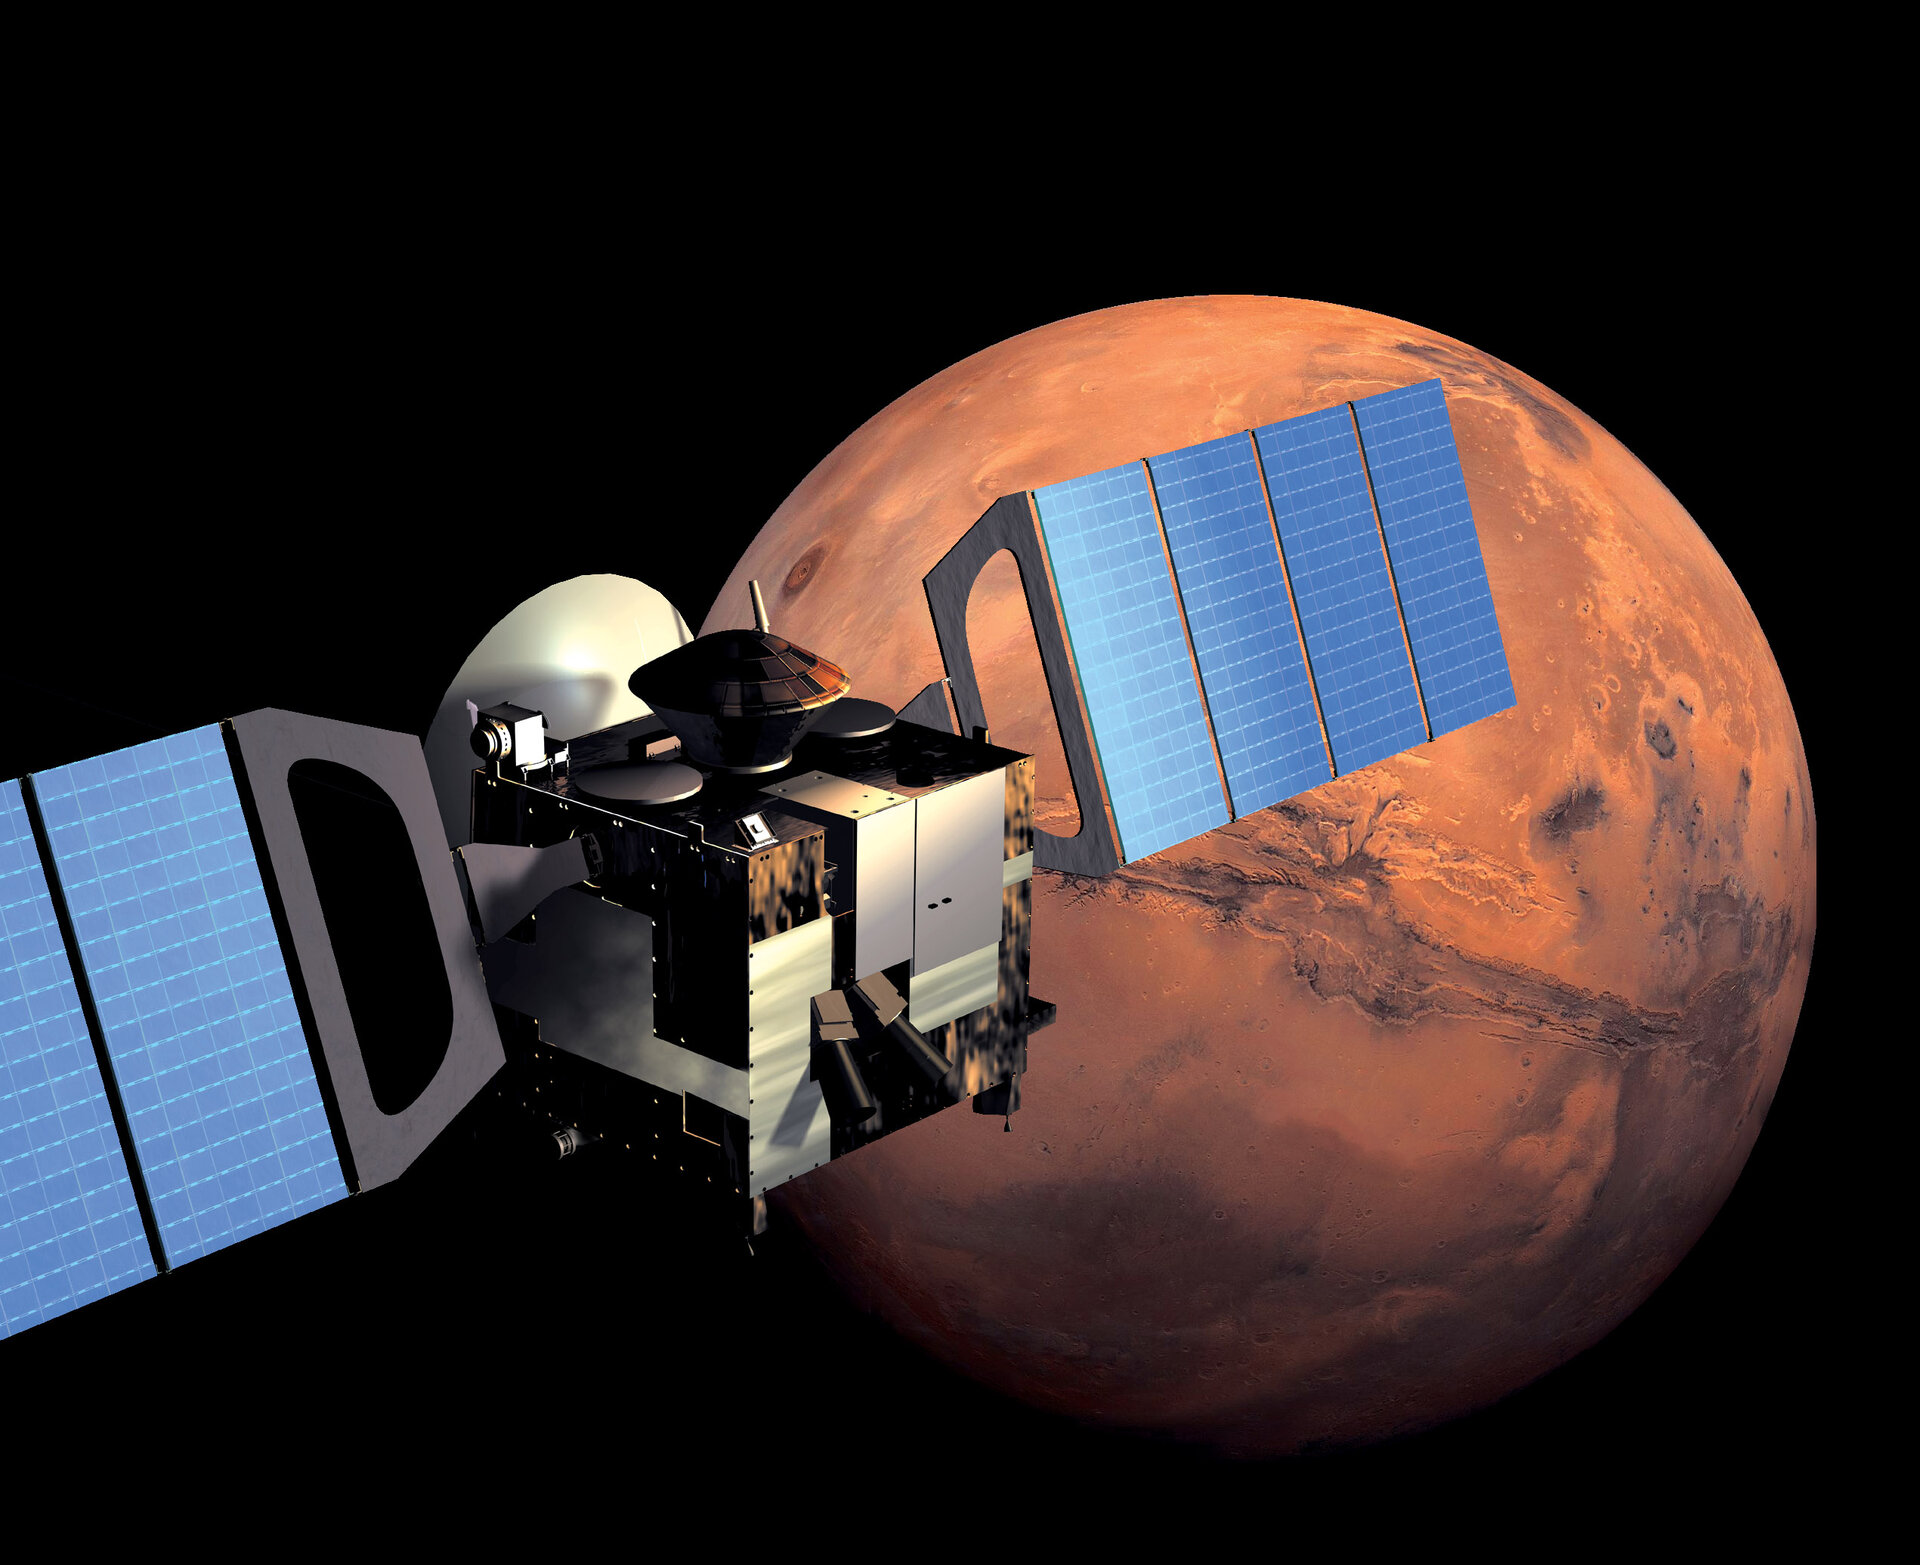 ESA - The spacecraft